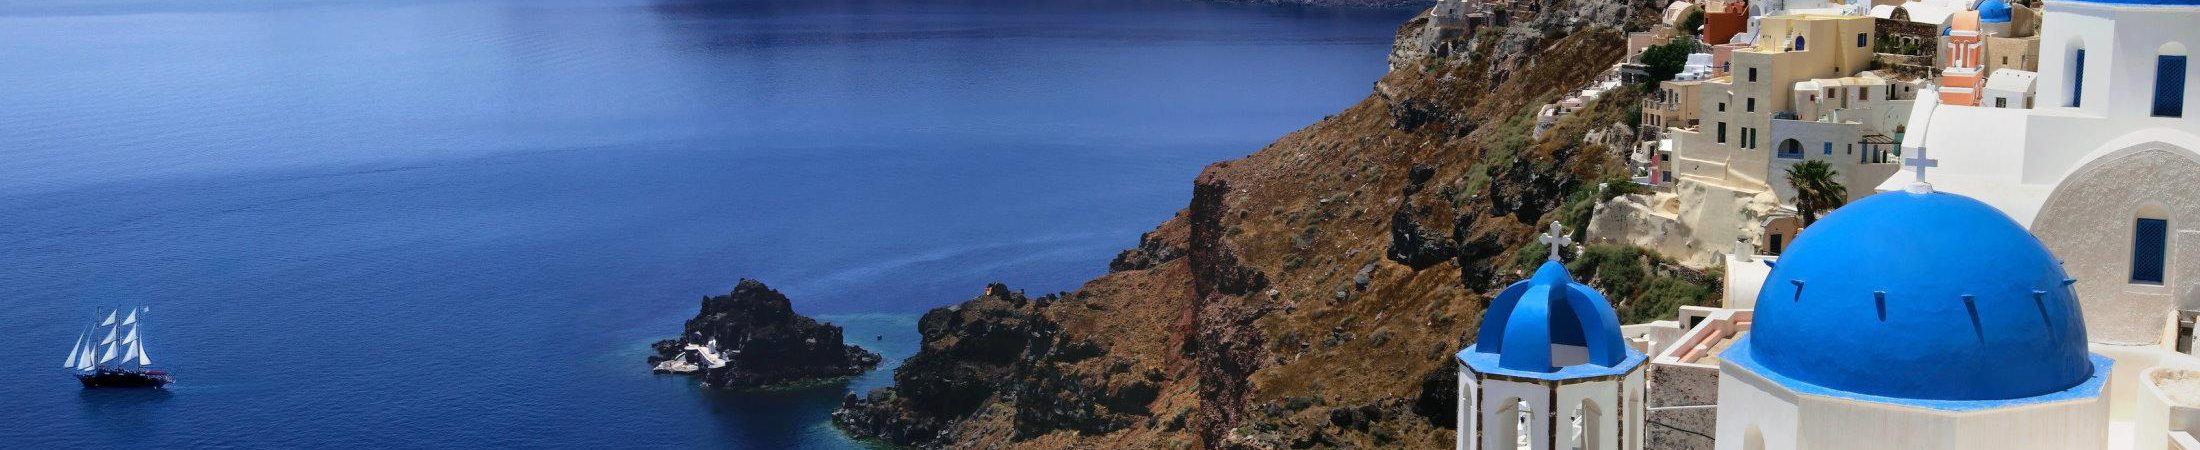 Santorini Caldera Travel